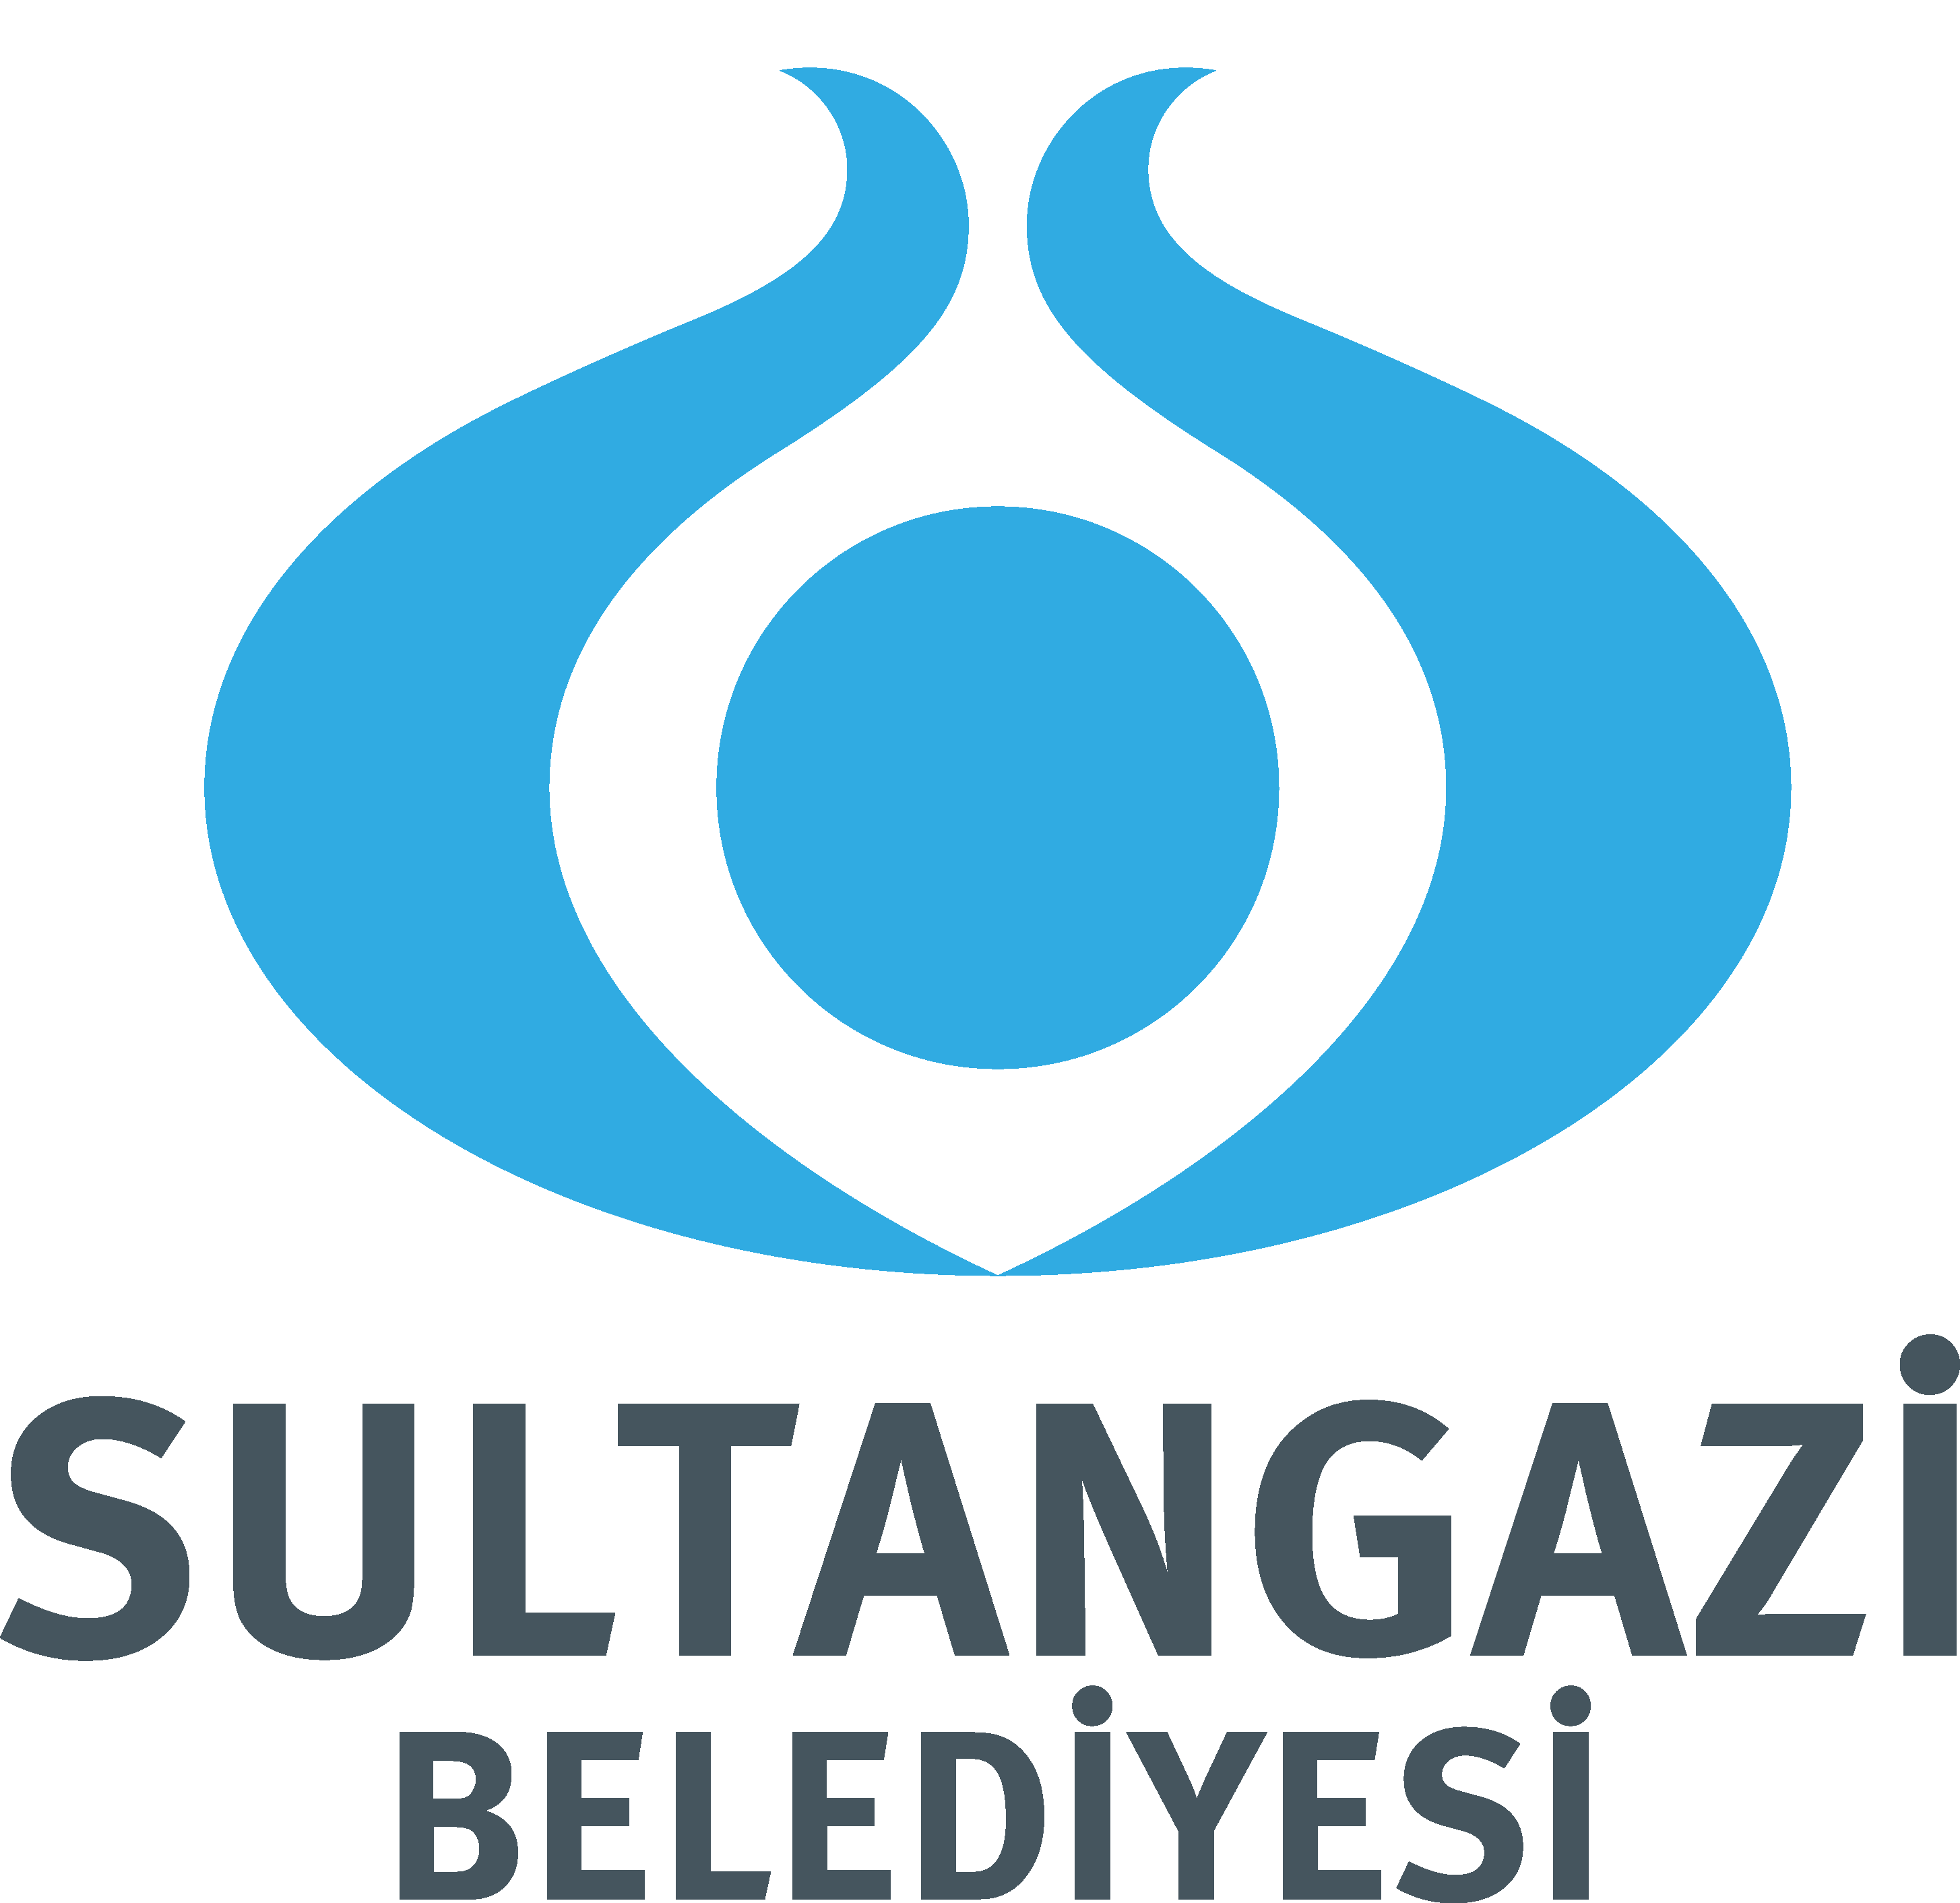 Sultangazi Belediyesi Logo (istanbul)